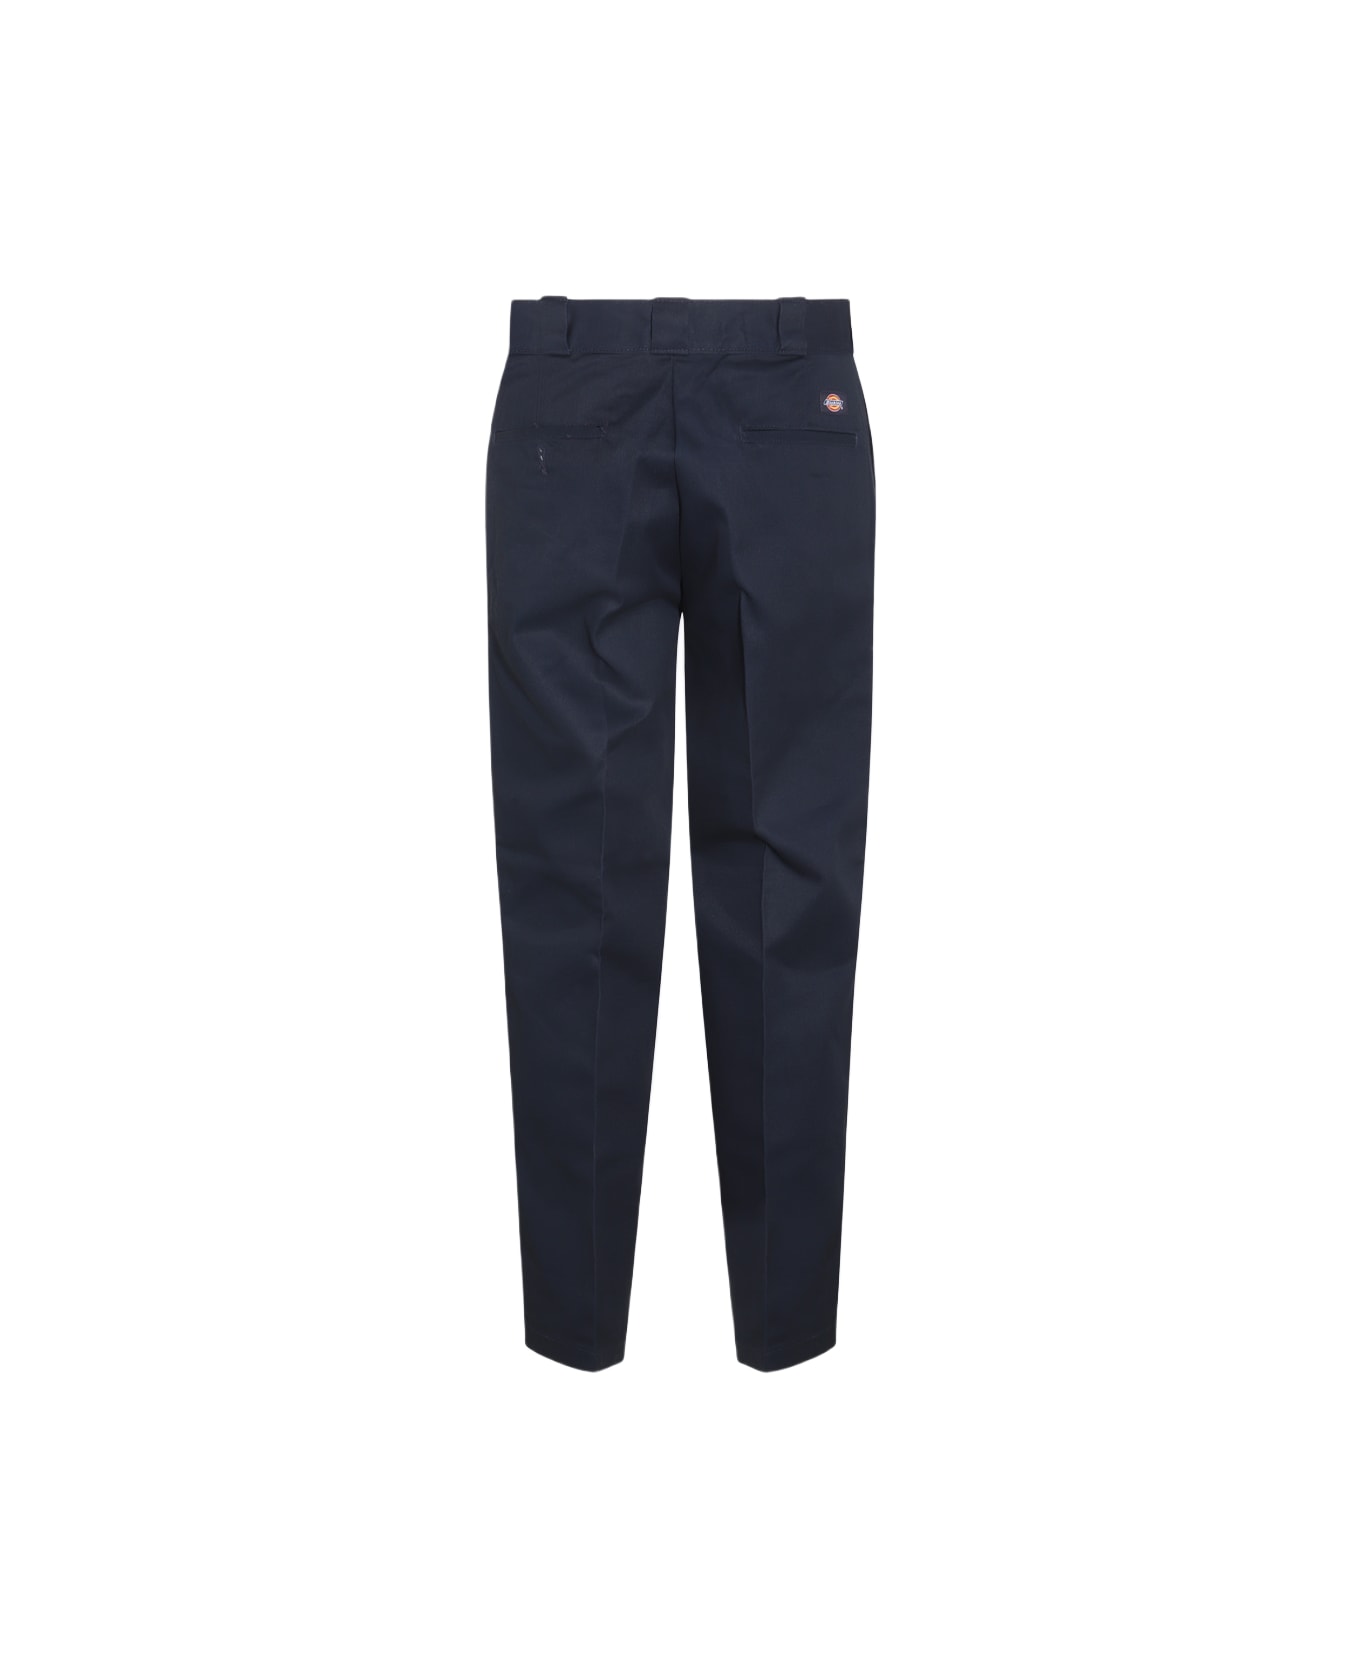 Dickies Navy Blue Cotton Pants